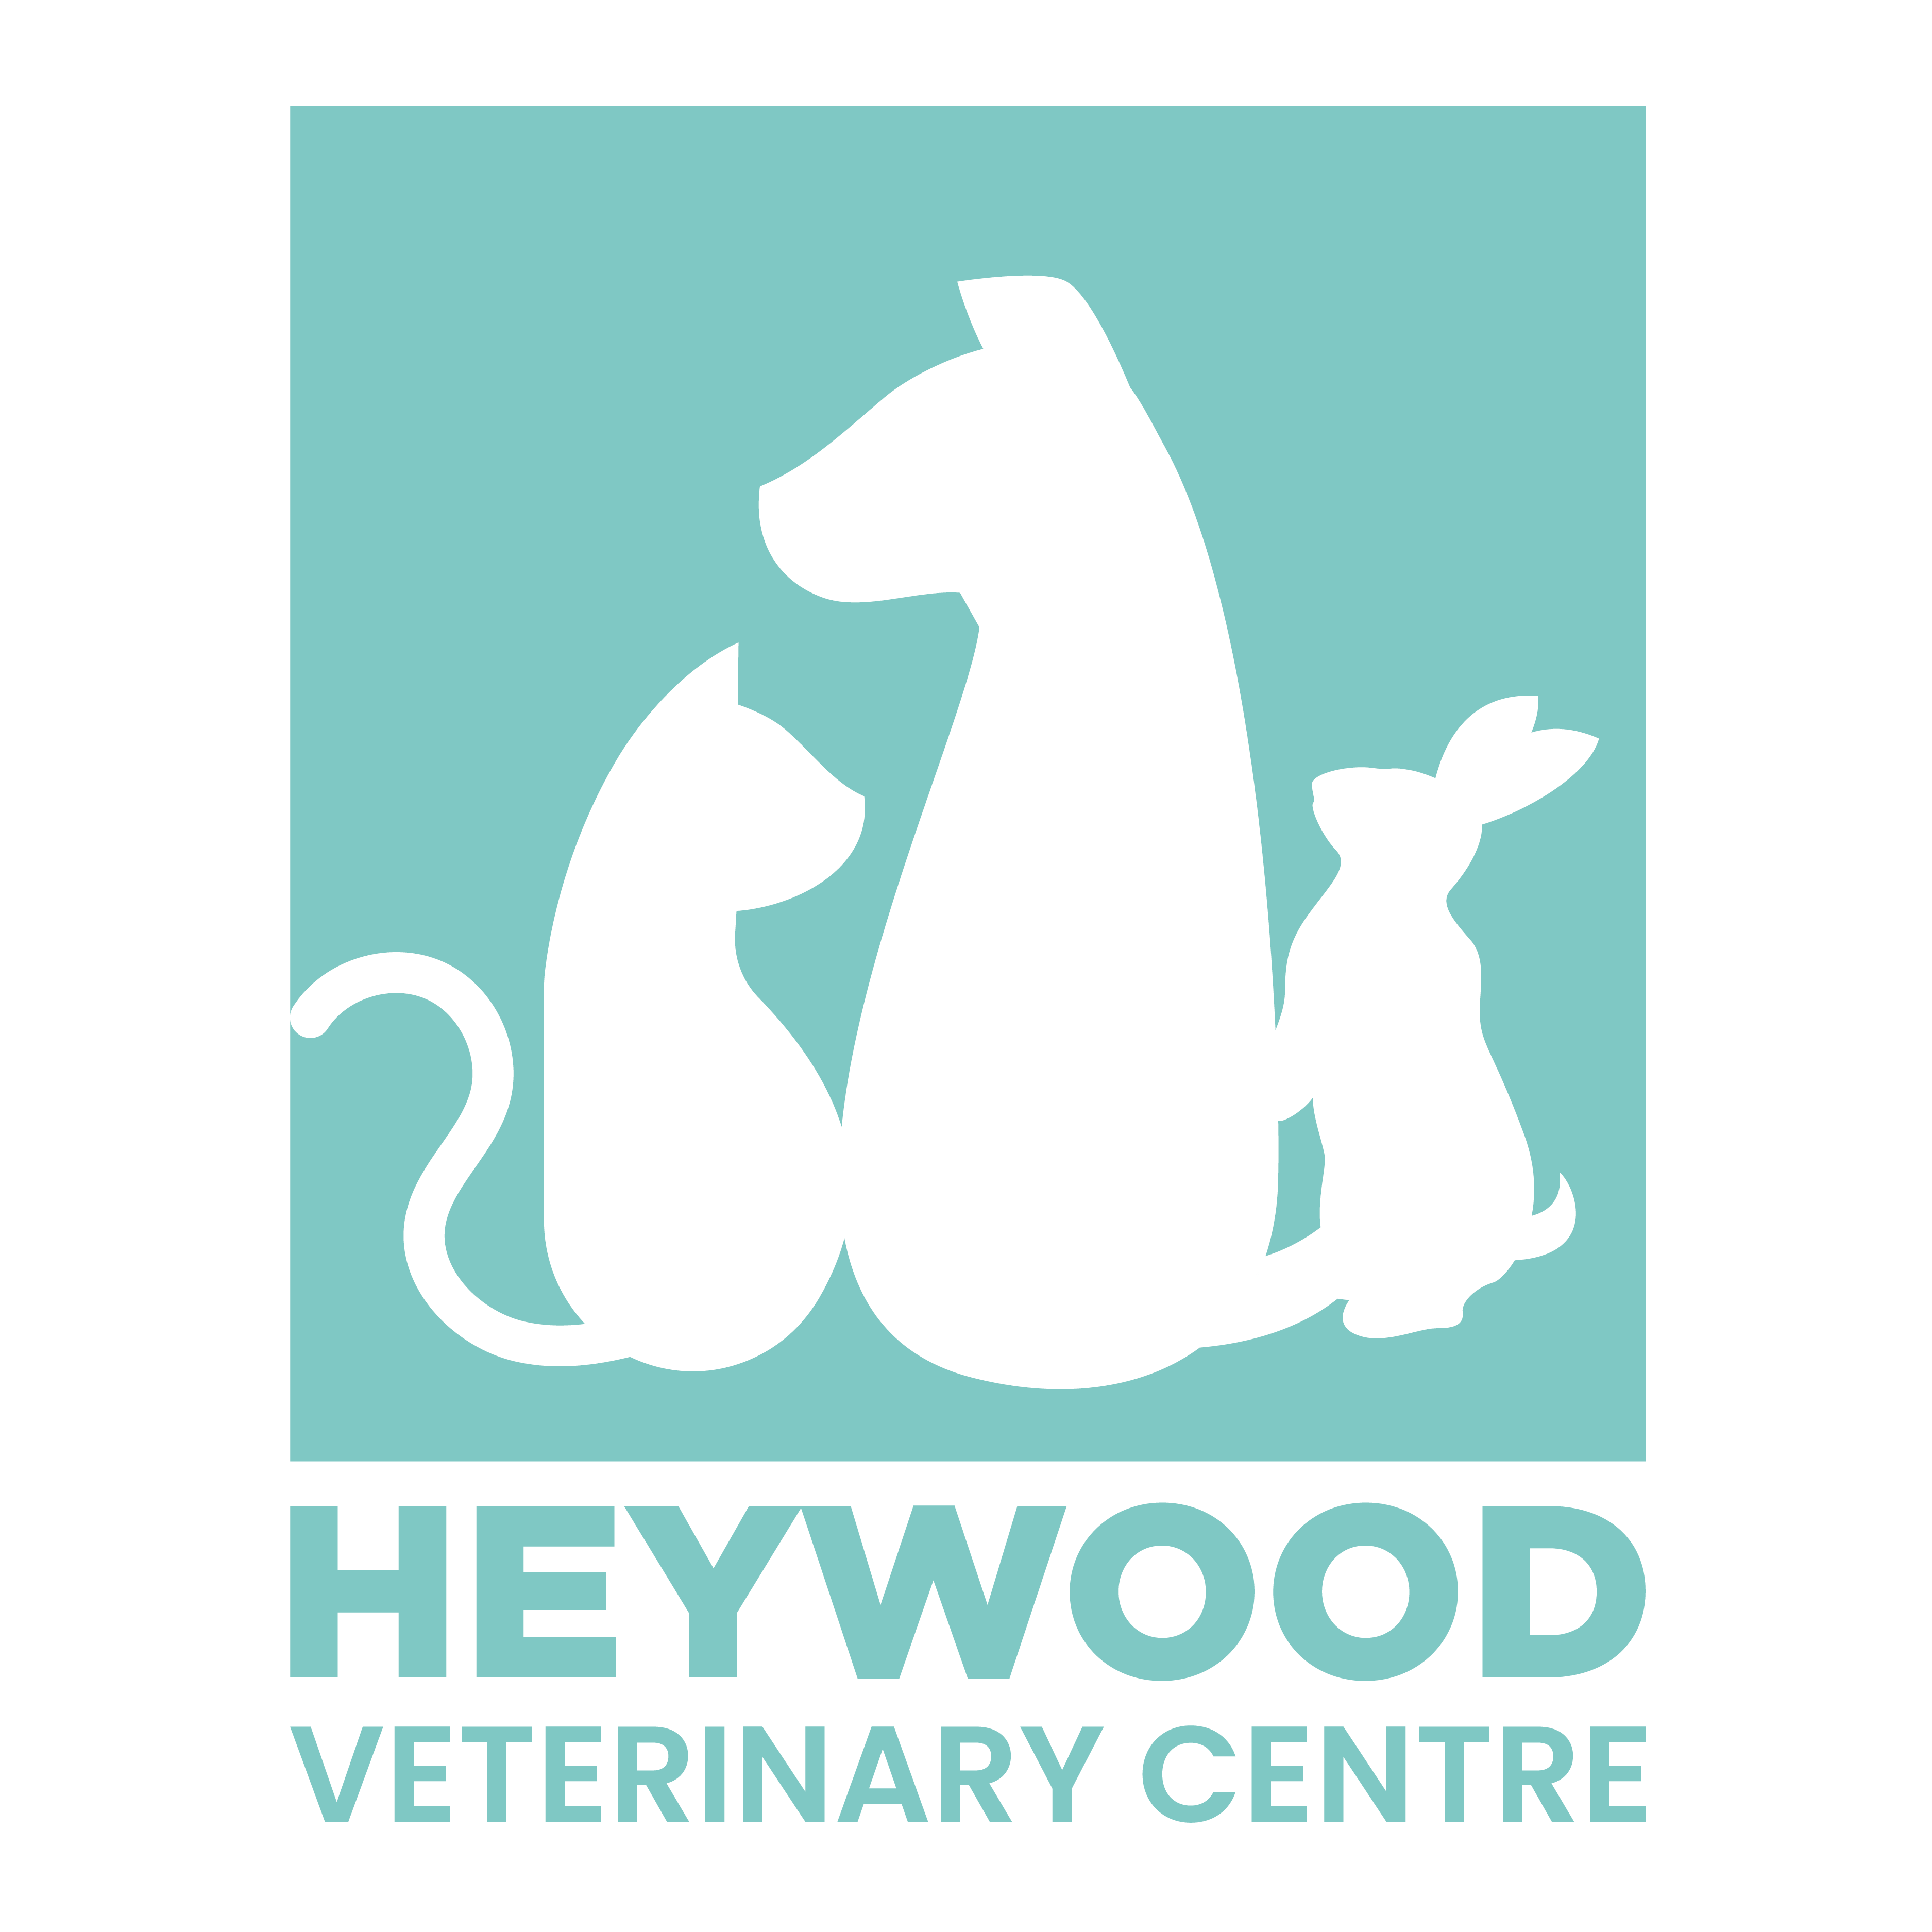 Heywood Veterinary Centre - Heywood, Lancashire OL10 1JG - 01706 369171 | ShowMeLocal.com